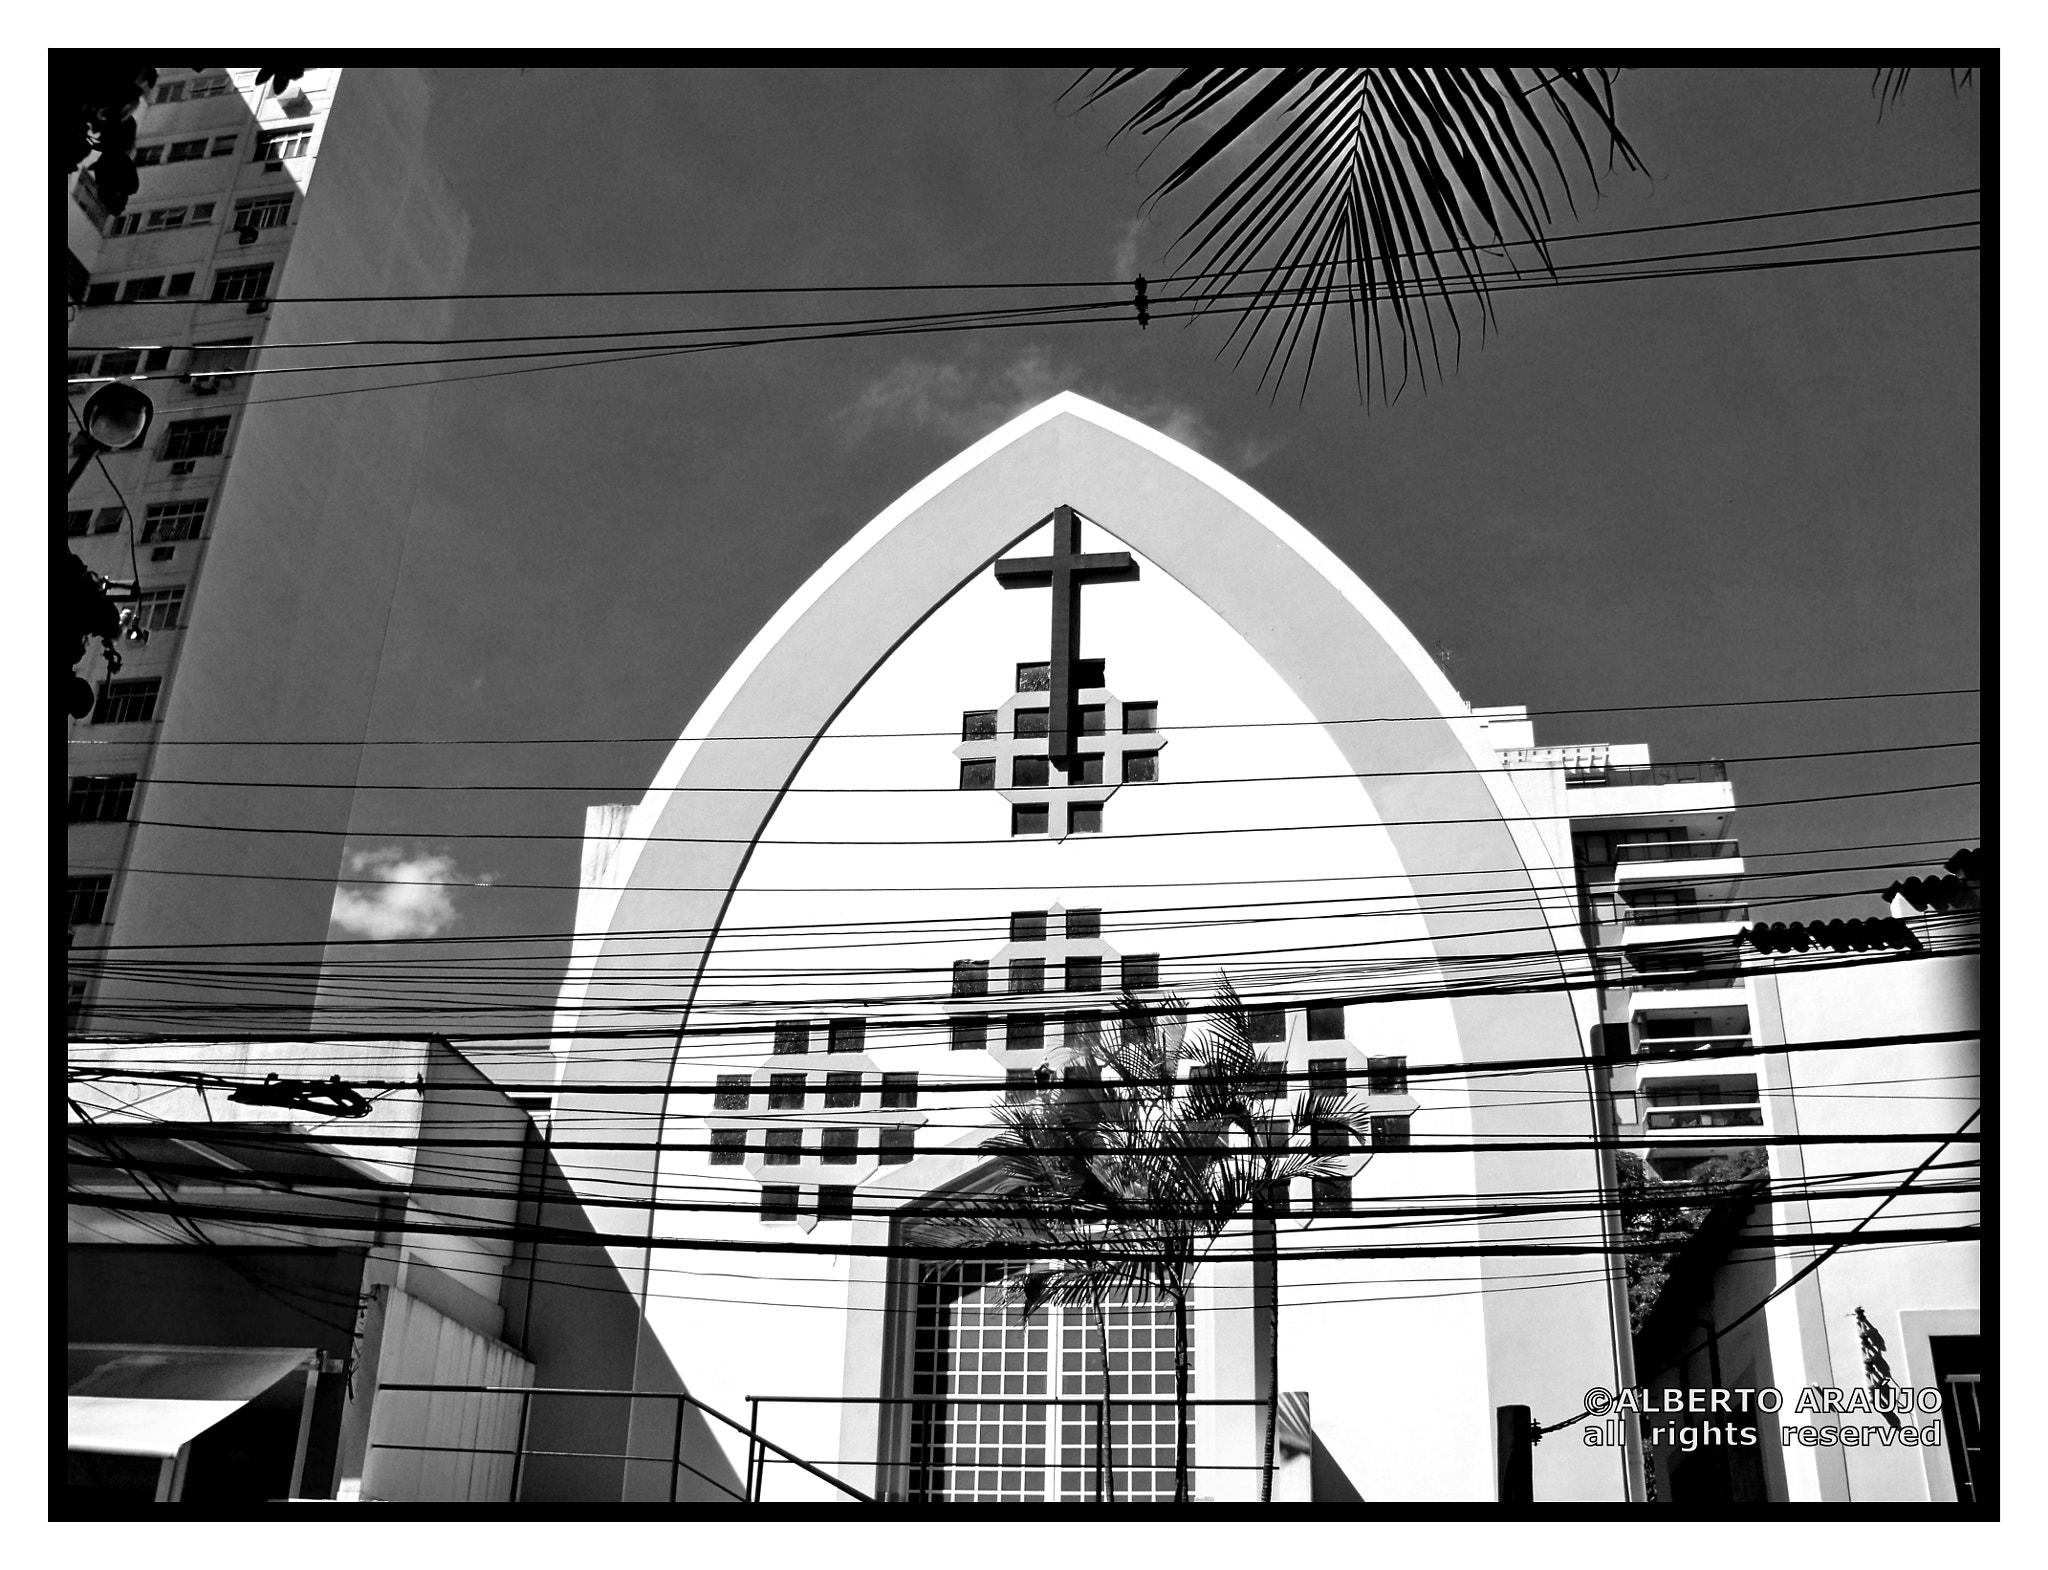 Kodak EASYSHARE Z950 DIGITAL CAMERA sample photo. Igreja divina providÊncia photography